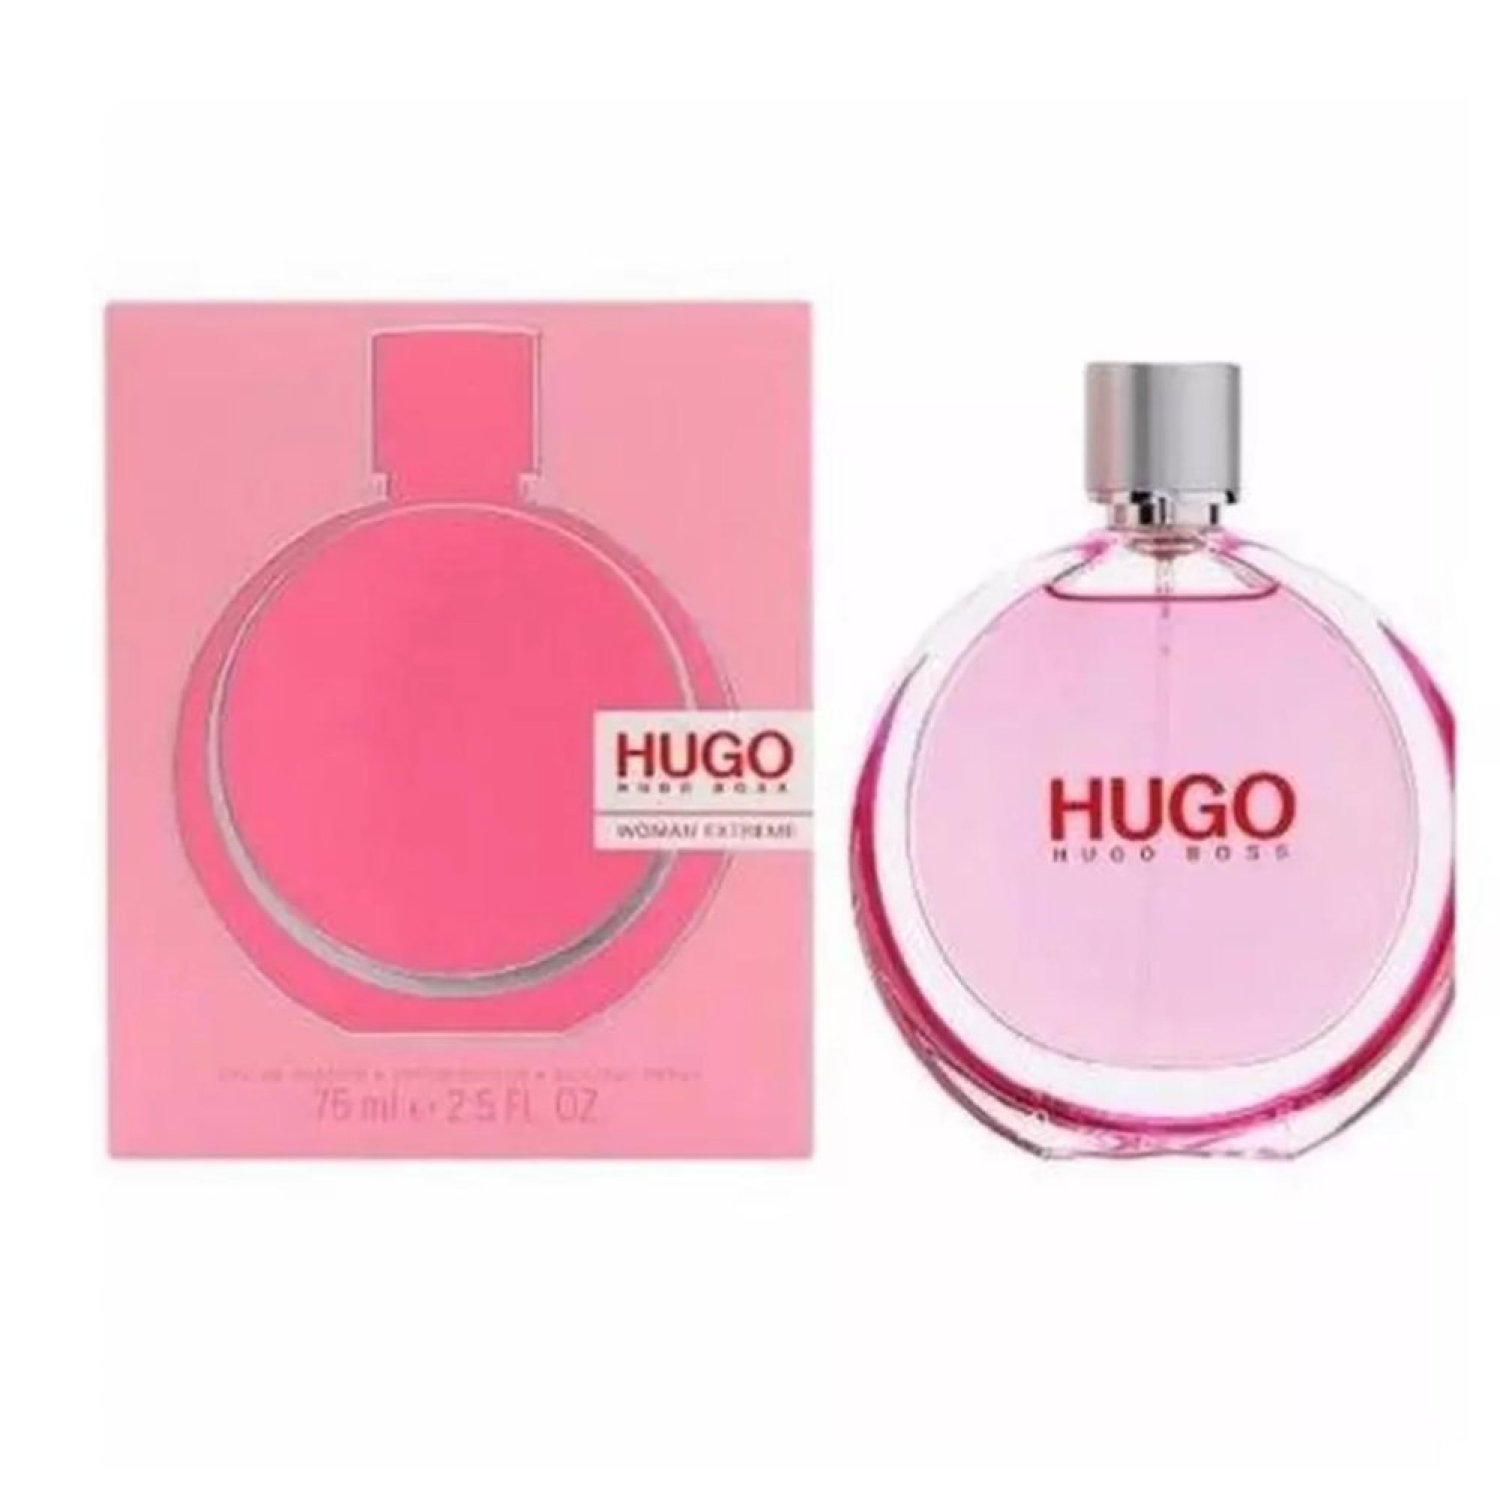 hugo boss extreme perfume price